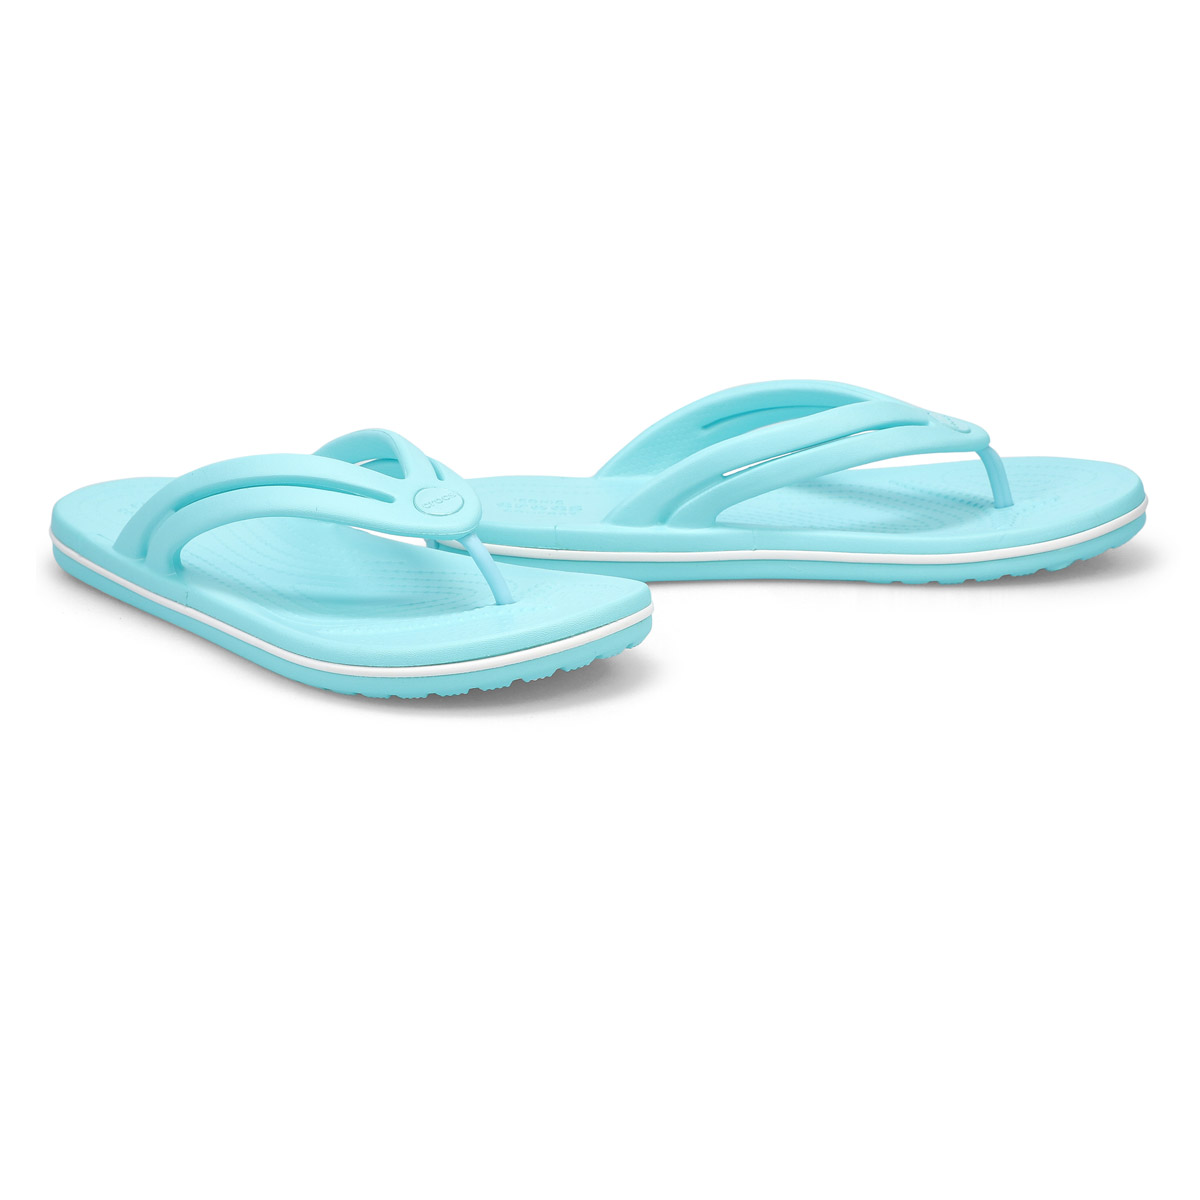 Sandale tong Crocband Flip, femmes - Bleu glacé